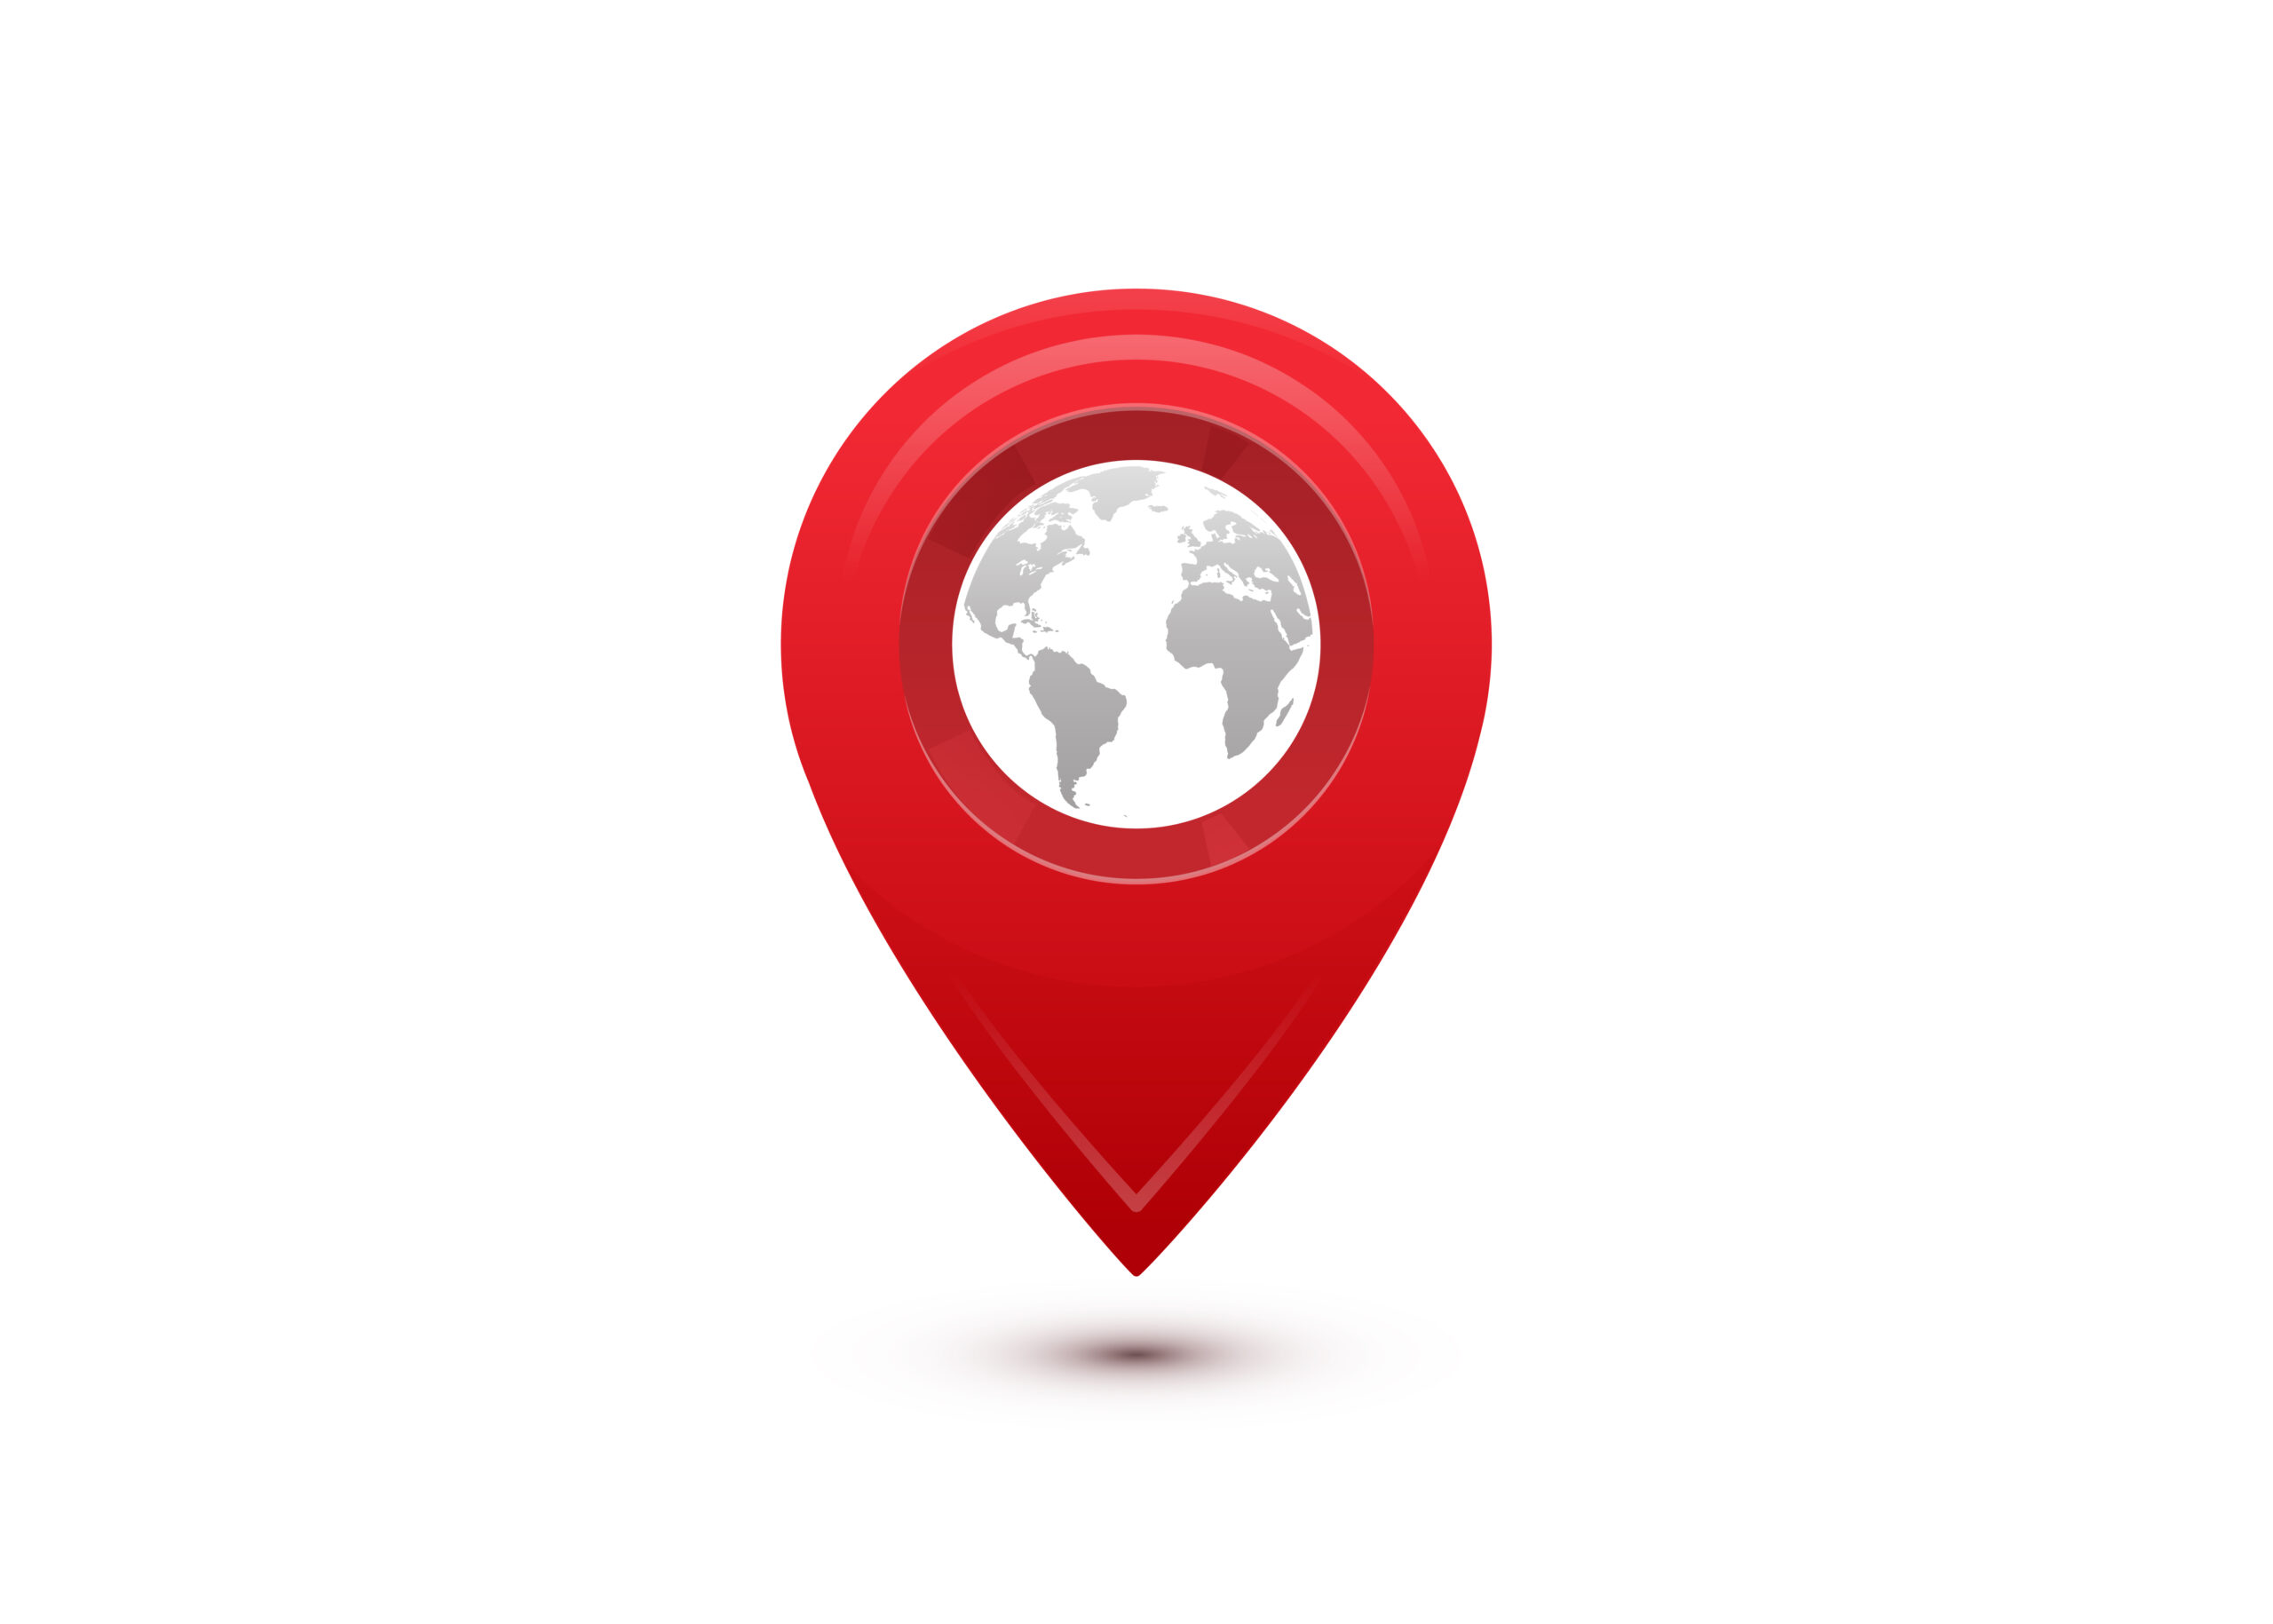 Destination concept. International travel journey. Red pointer with grey world map inside. Vector illustration